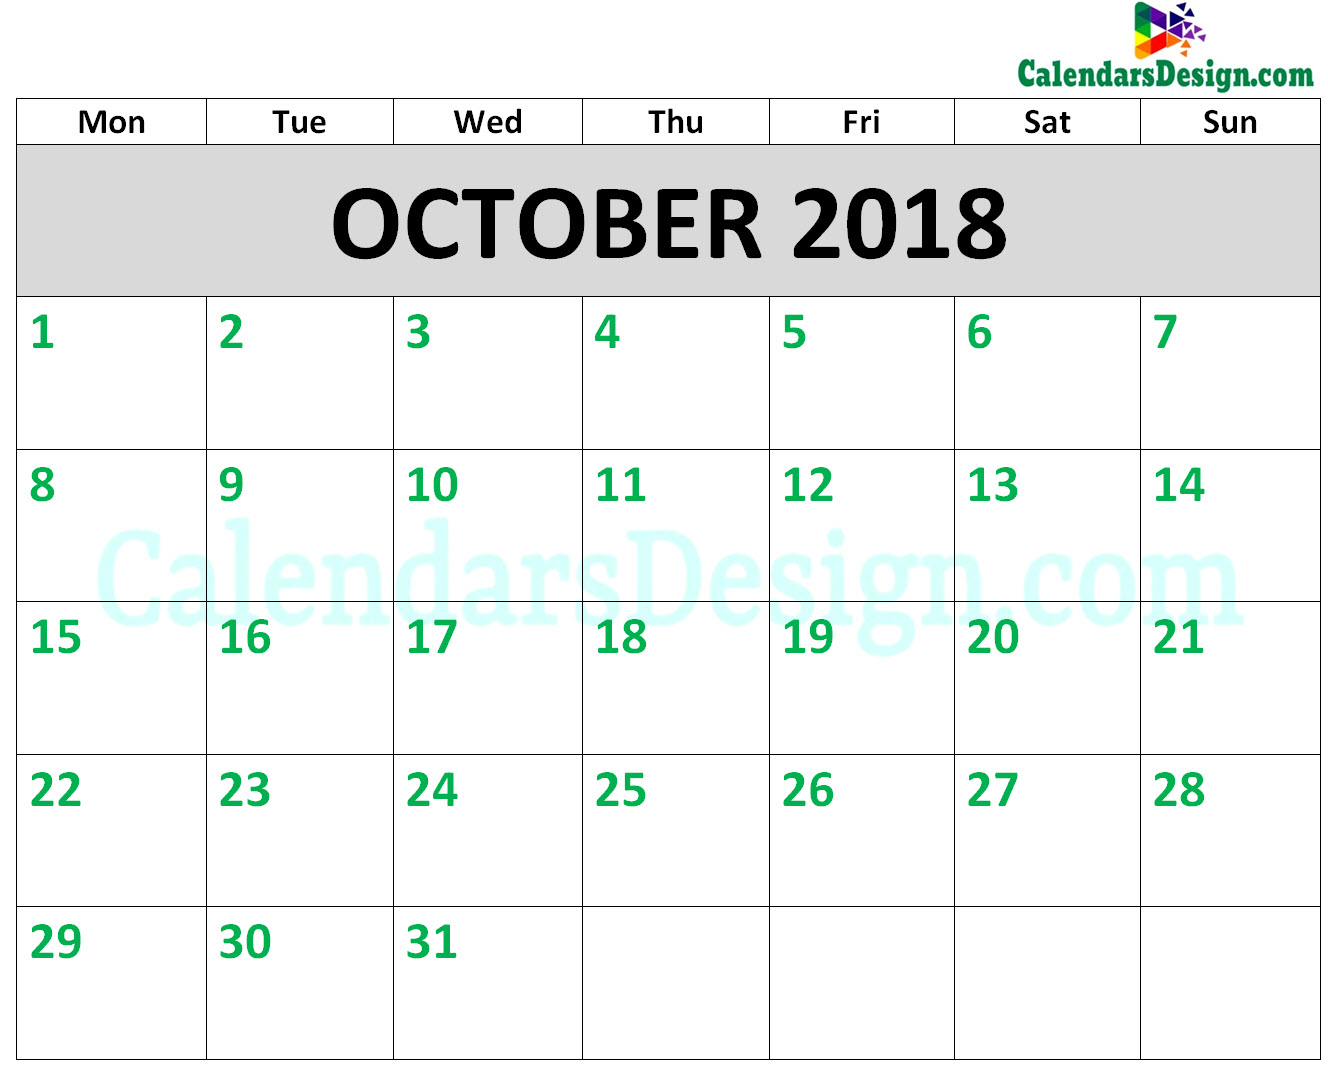 october-2018-calendar-template